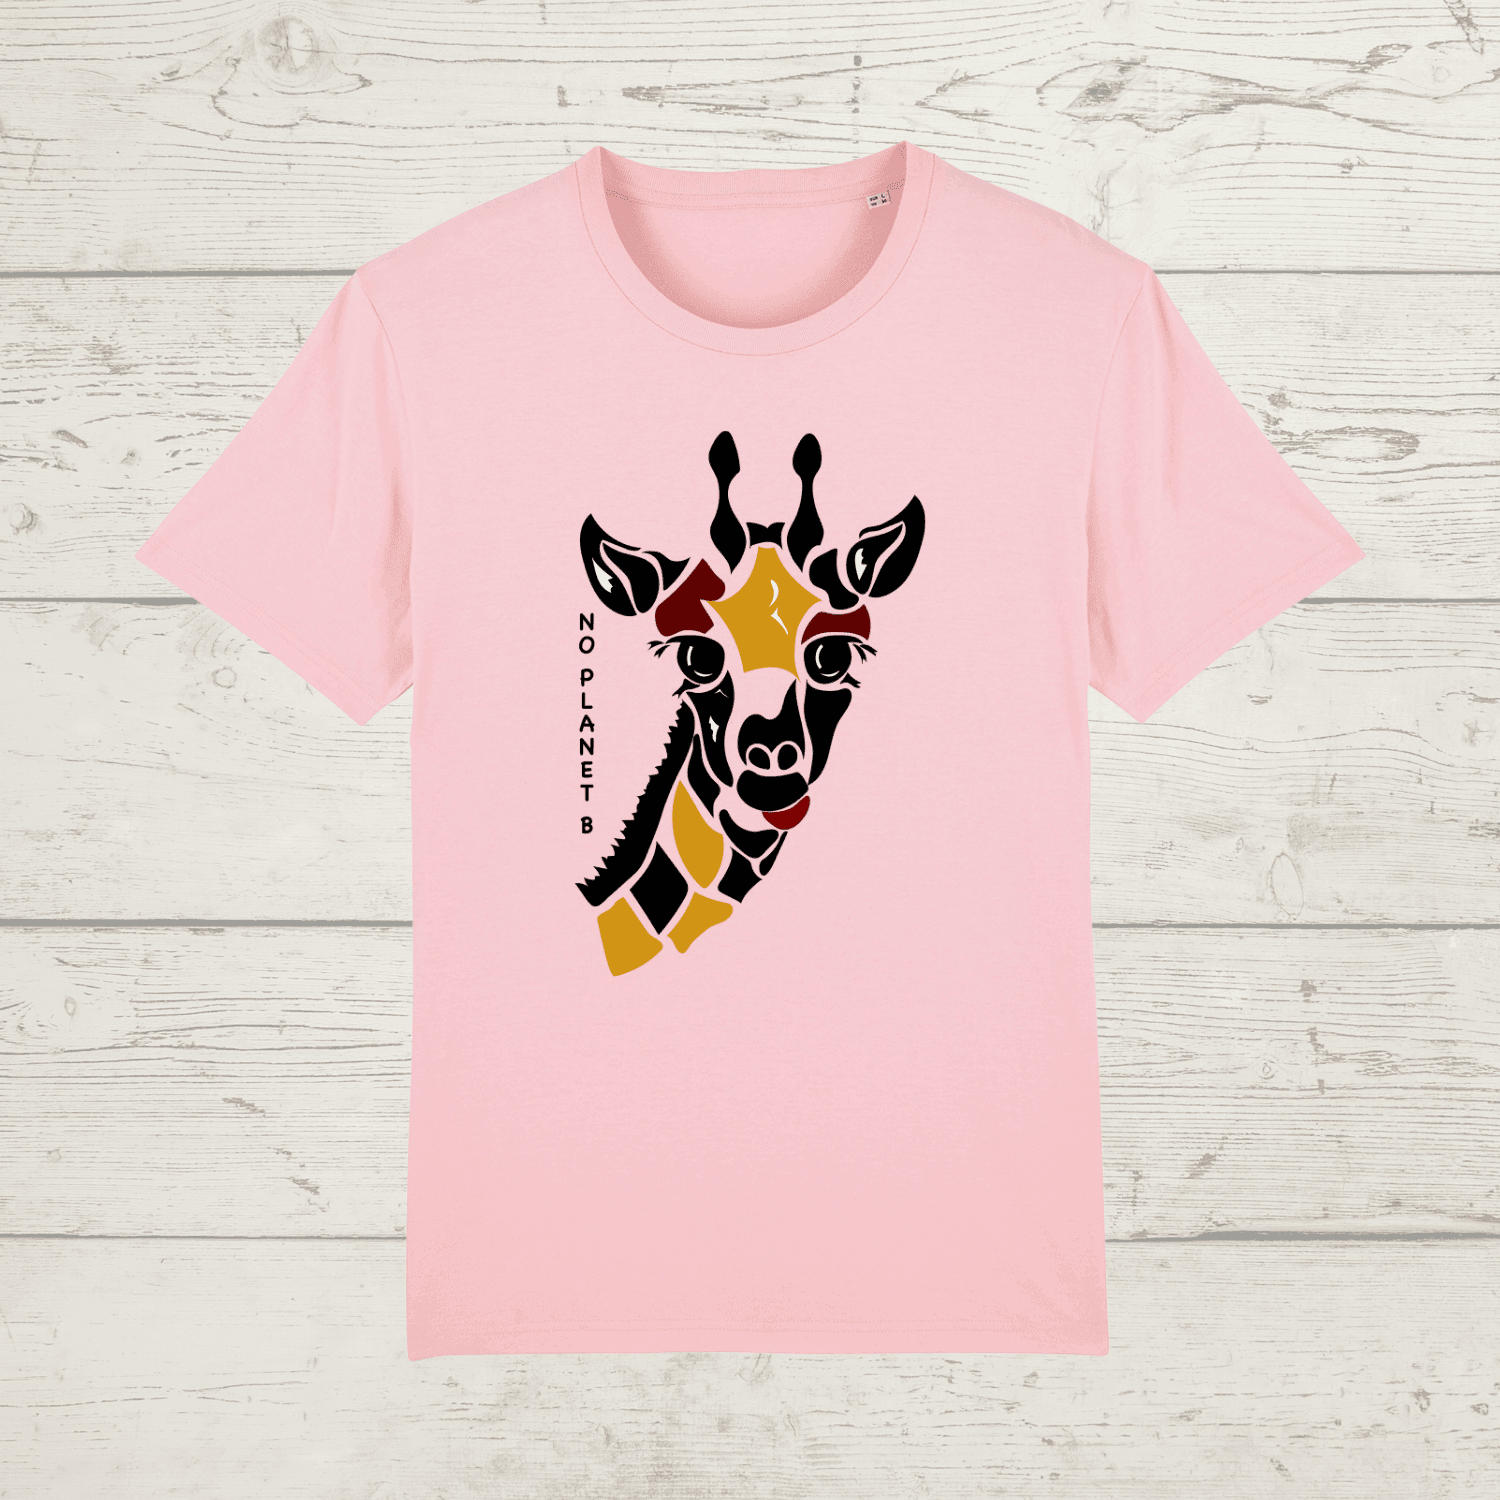 Kid’s no planet b giraffe t-shirt - cotton pink / 3-4 years